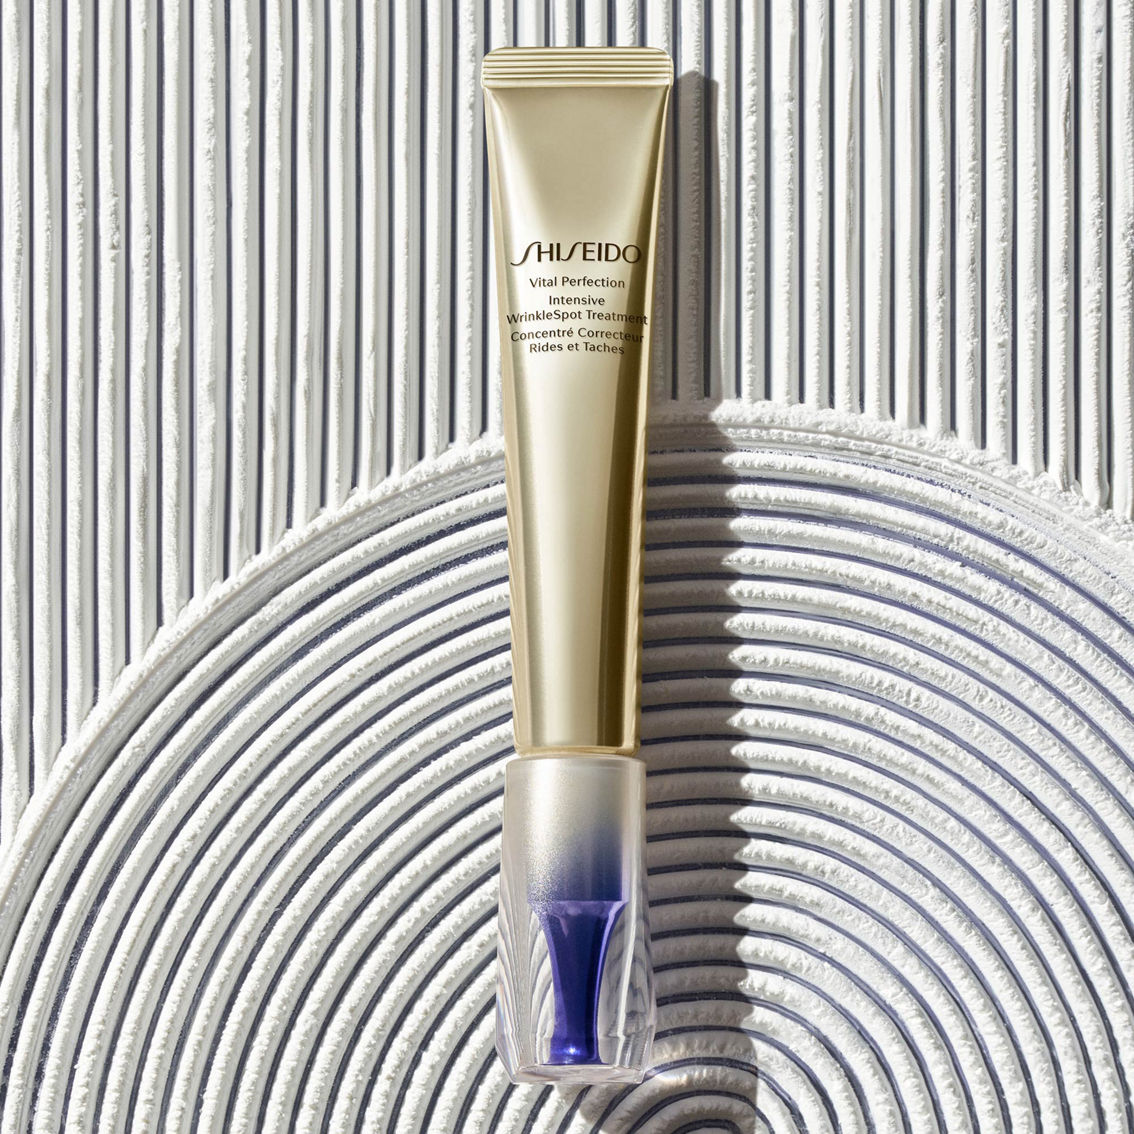 Shiseido Vital Perfection Intensive WrinkleSpot Treatment - Image 5 of 8